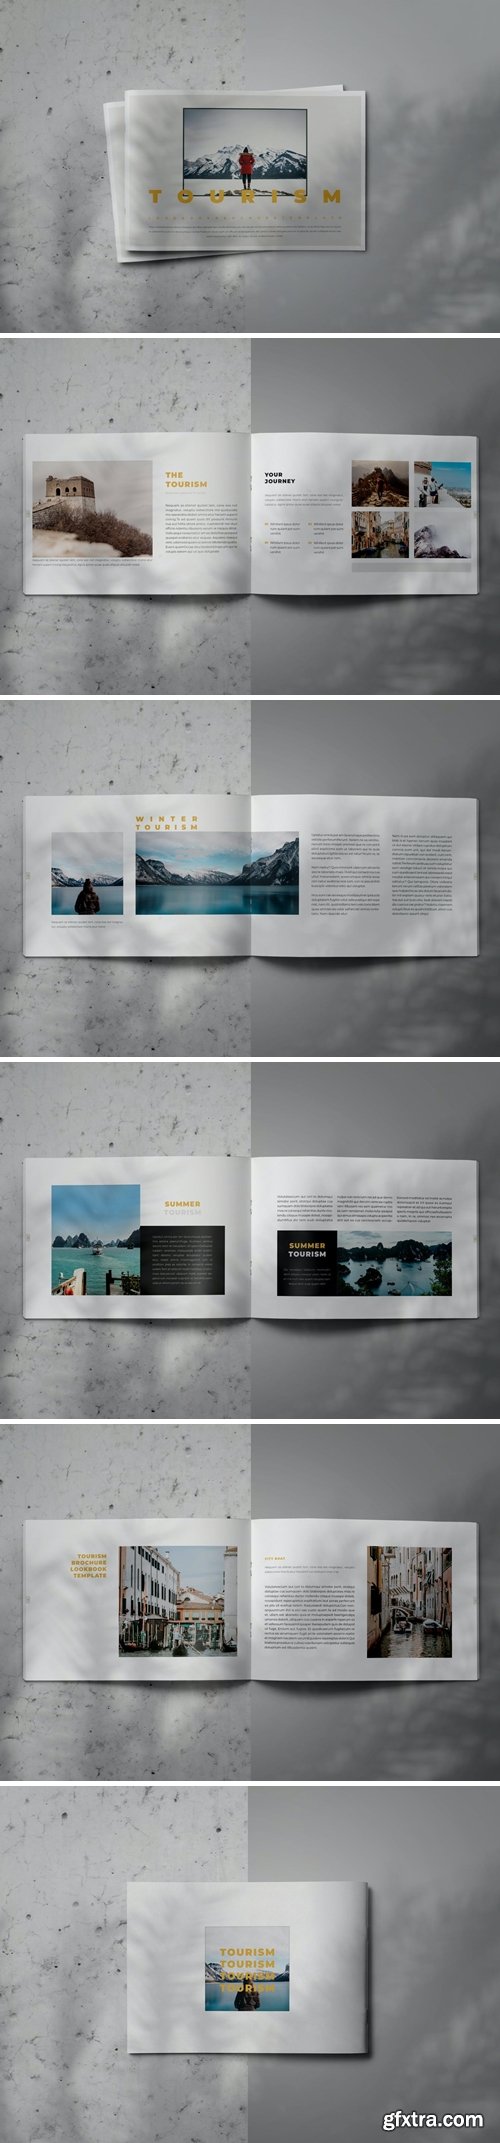 TOURISM - Indesign Brochure Lookbook Template